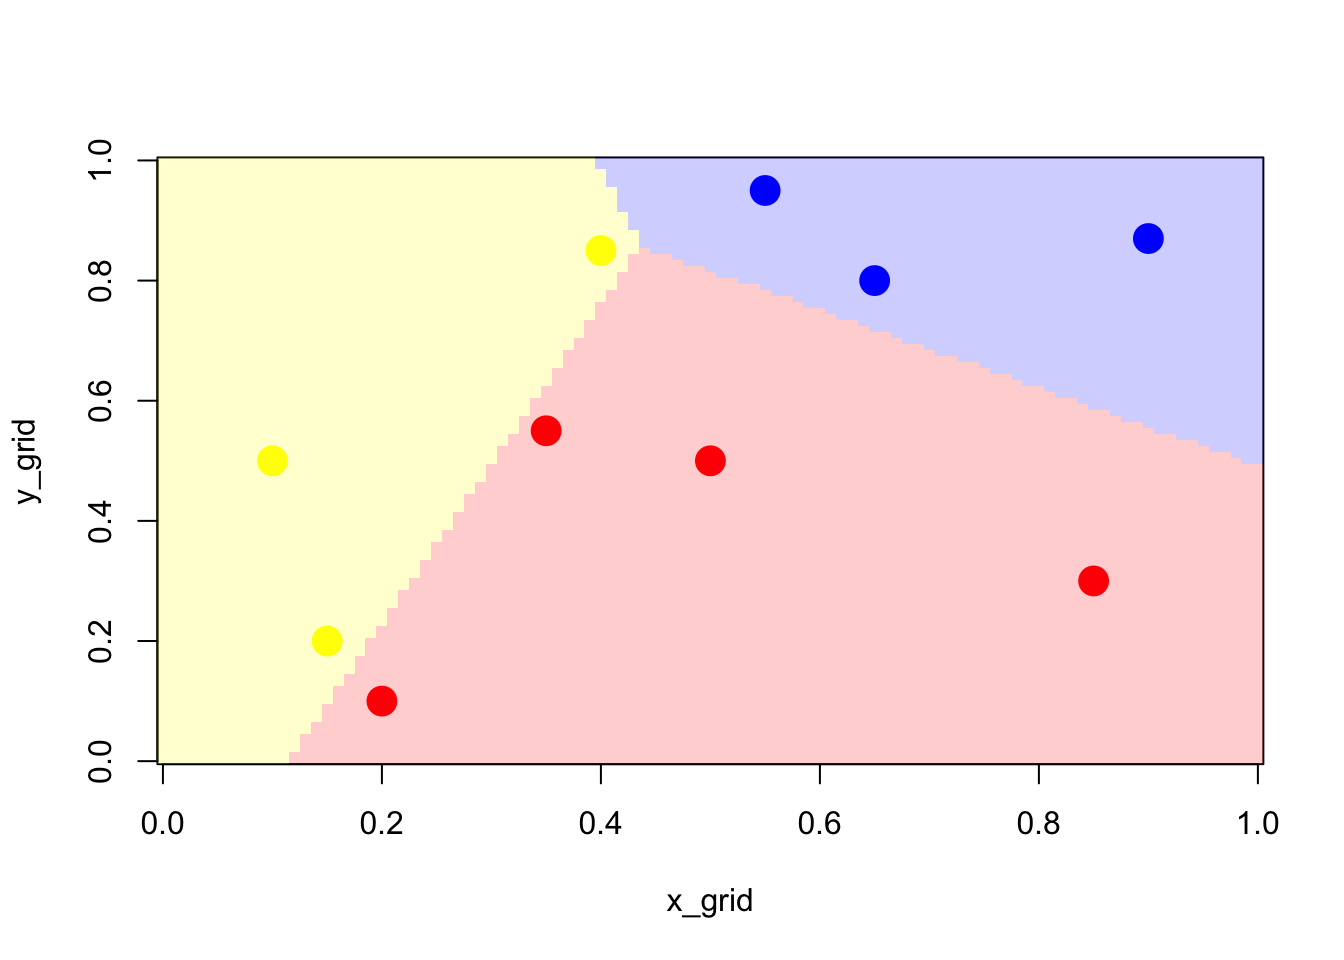 Classifier using multinomial model